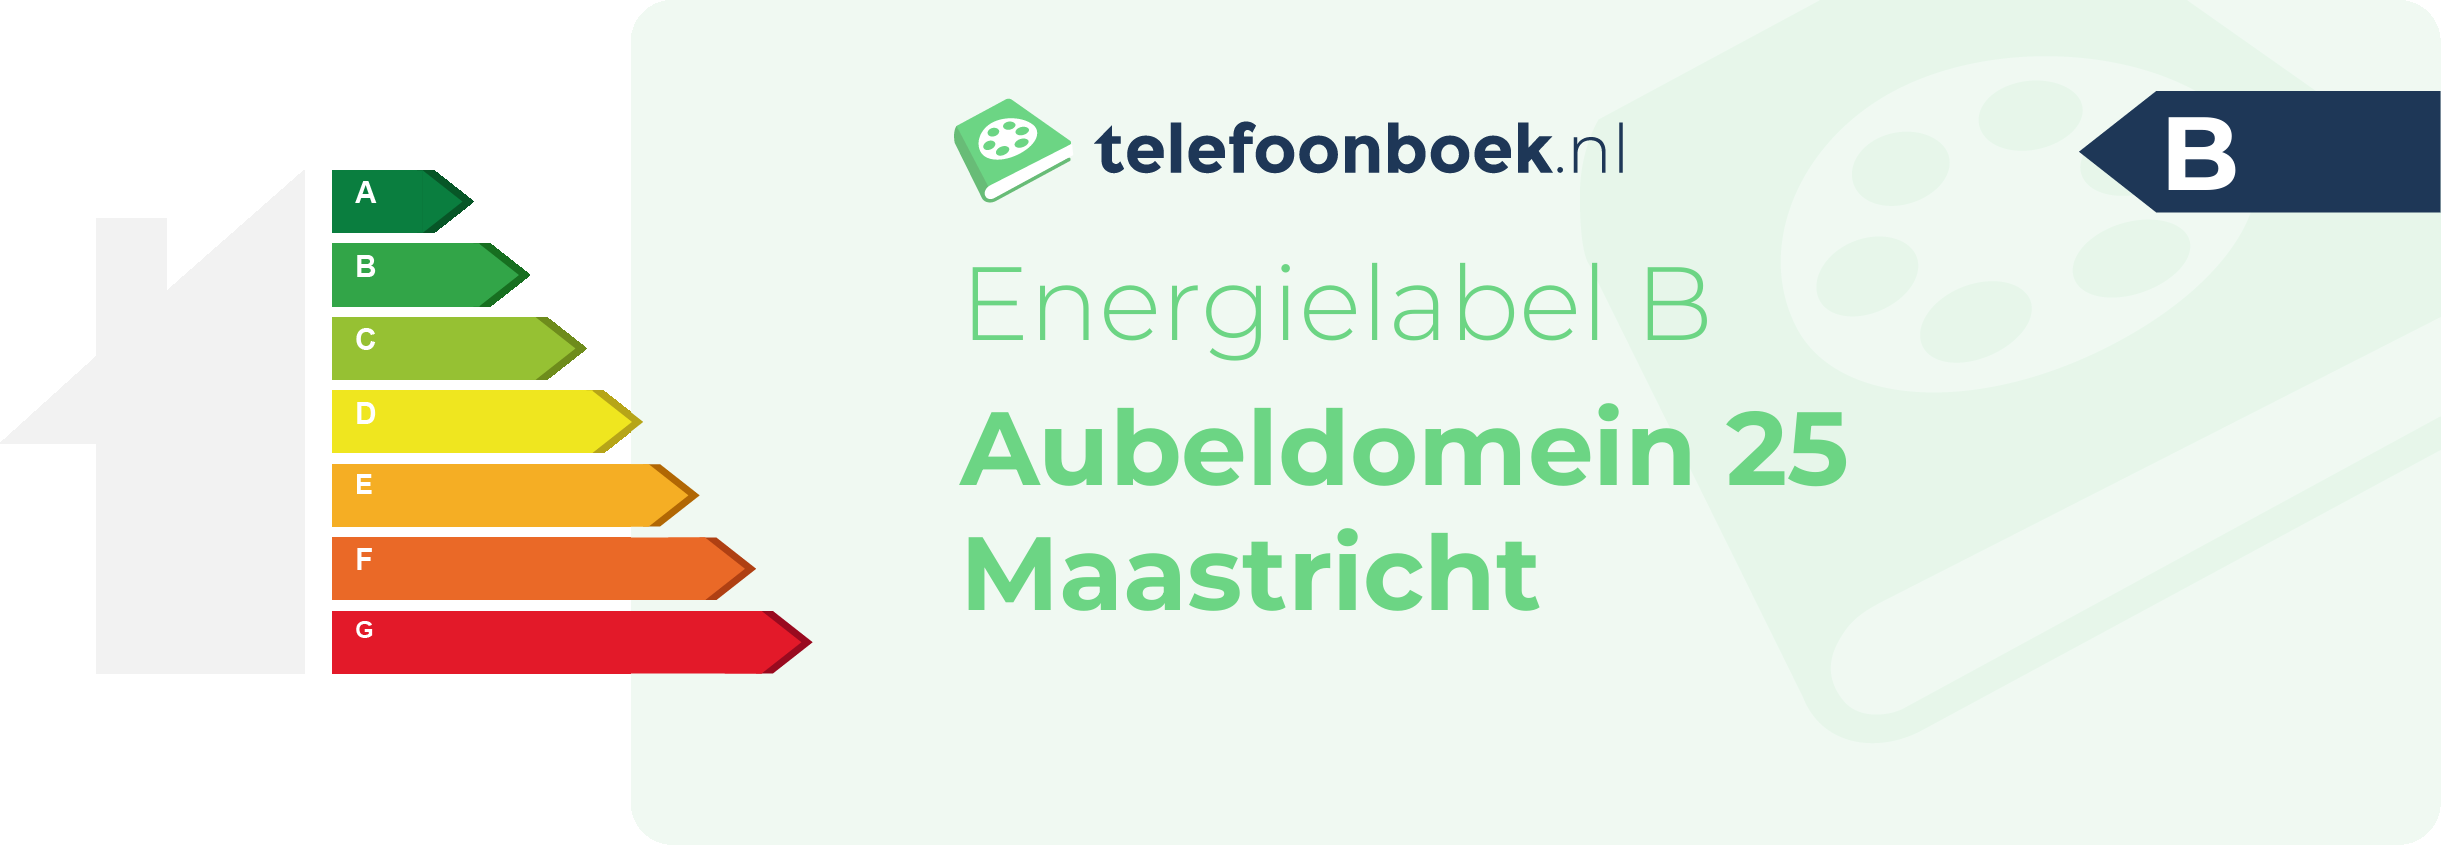 Energielabel Aubeldomein 25 Maastricht